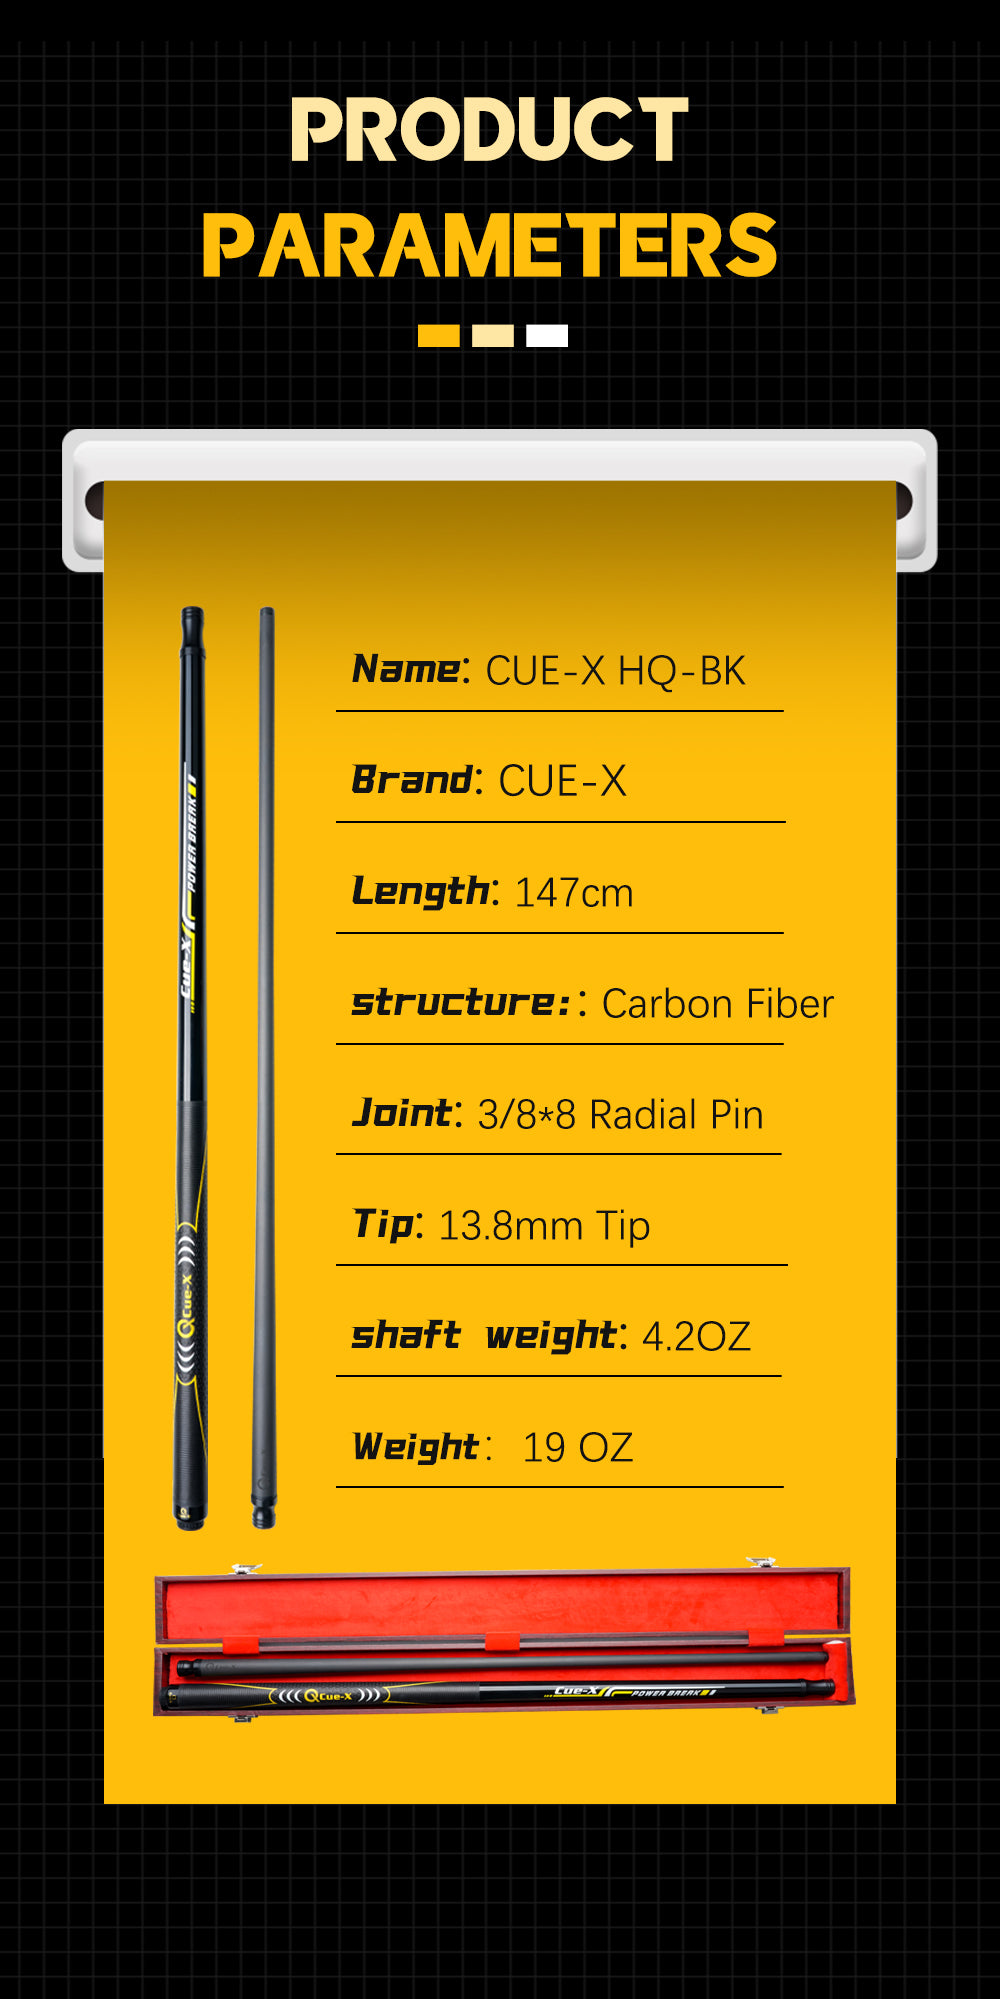 KONLLEN Cue-X-BK Billiard Cue Stick Carbon Fiber Shaft Punch Cue 13mm Bakelite Tip 3/8*8 Radial Pin Joint 58" Stick Pool Cue